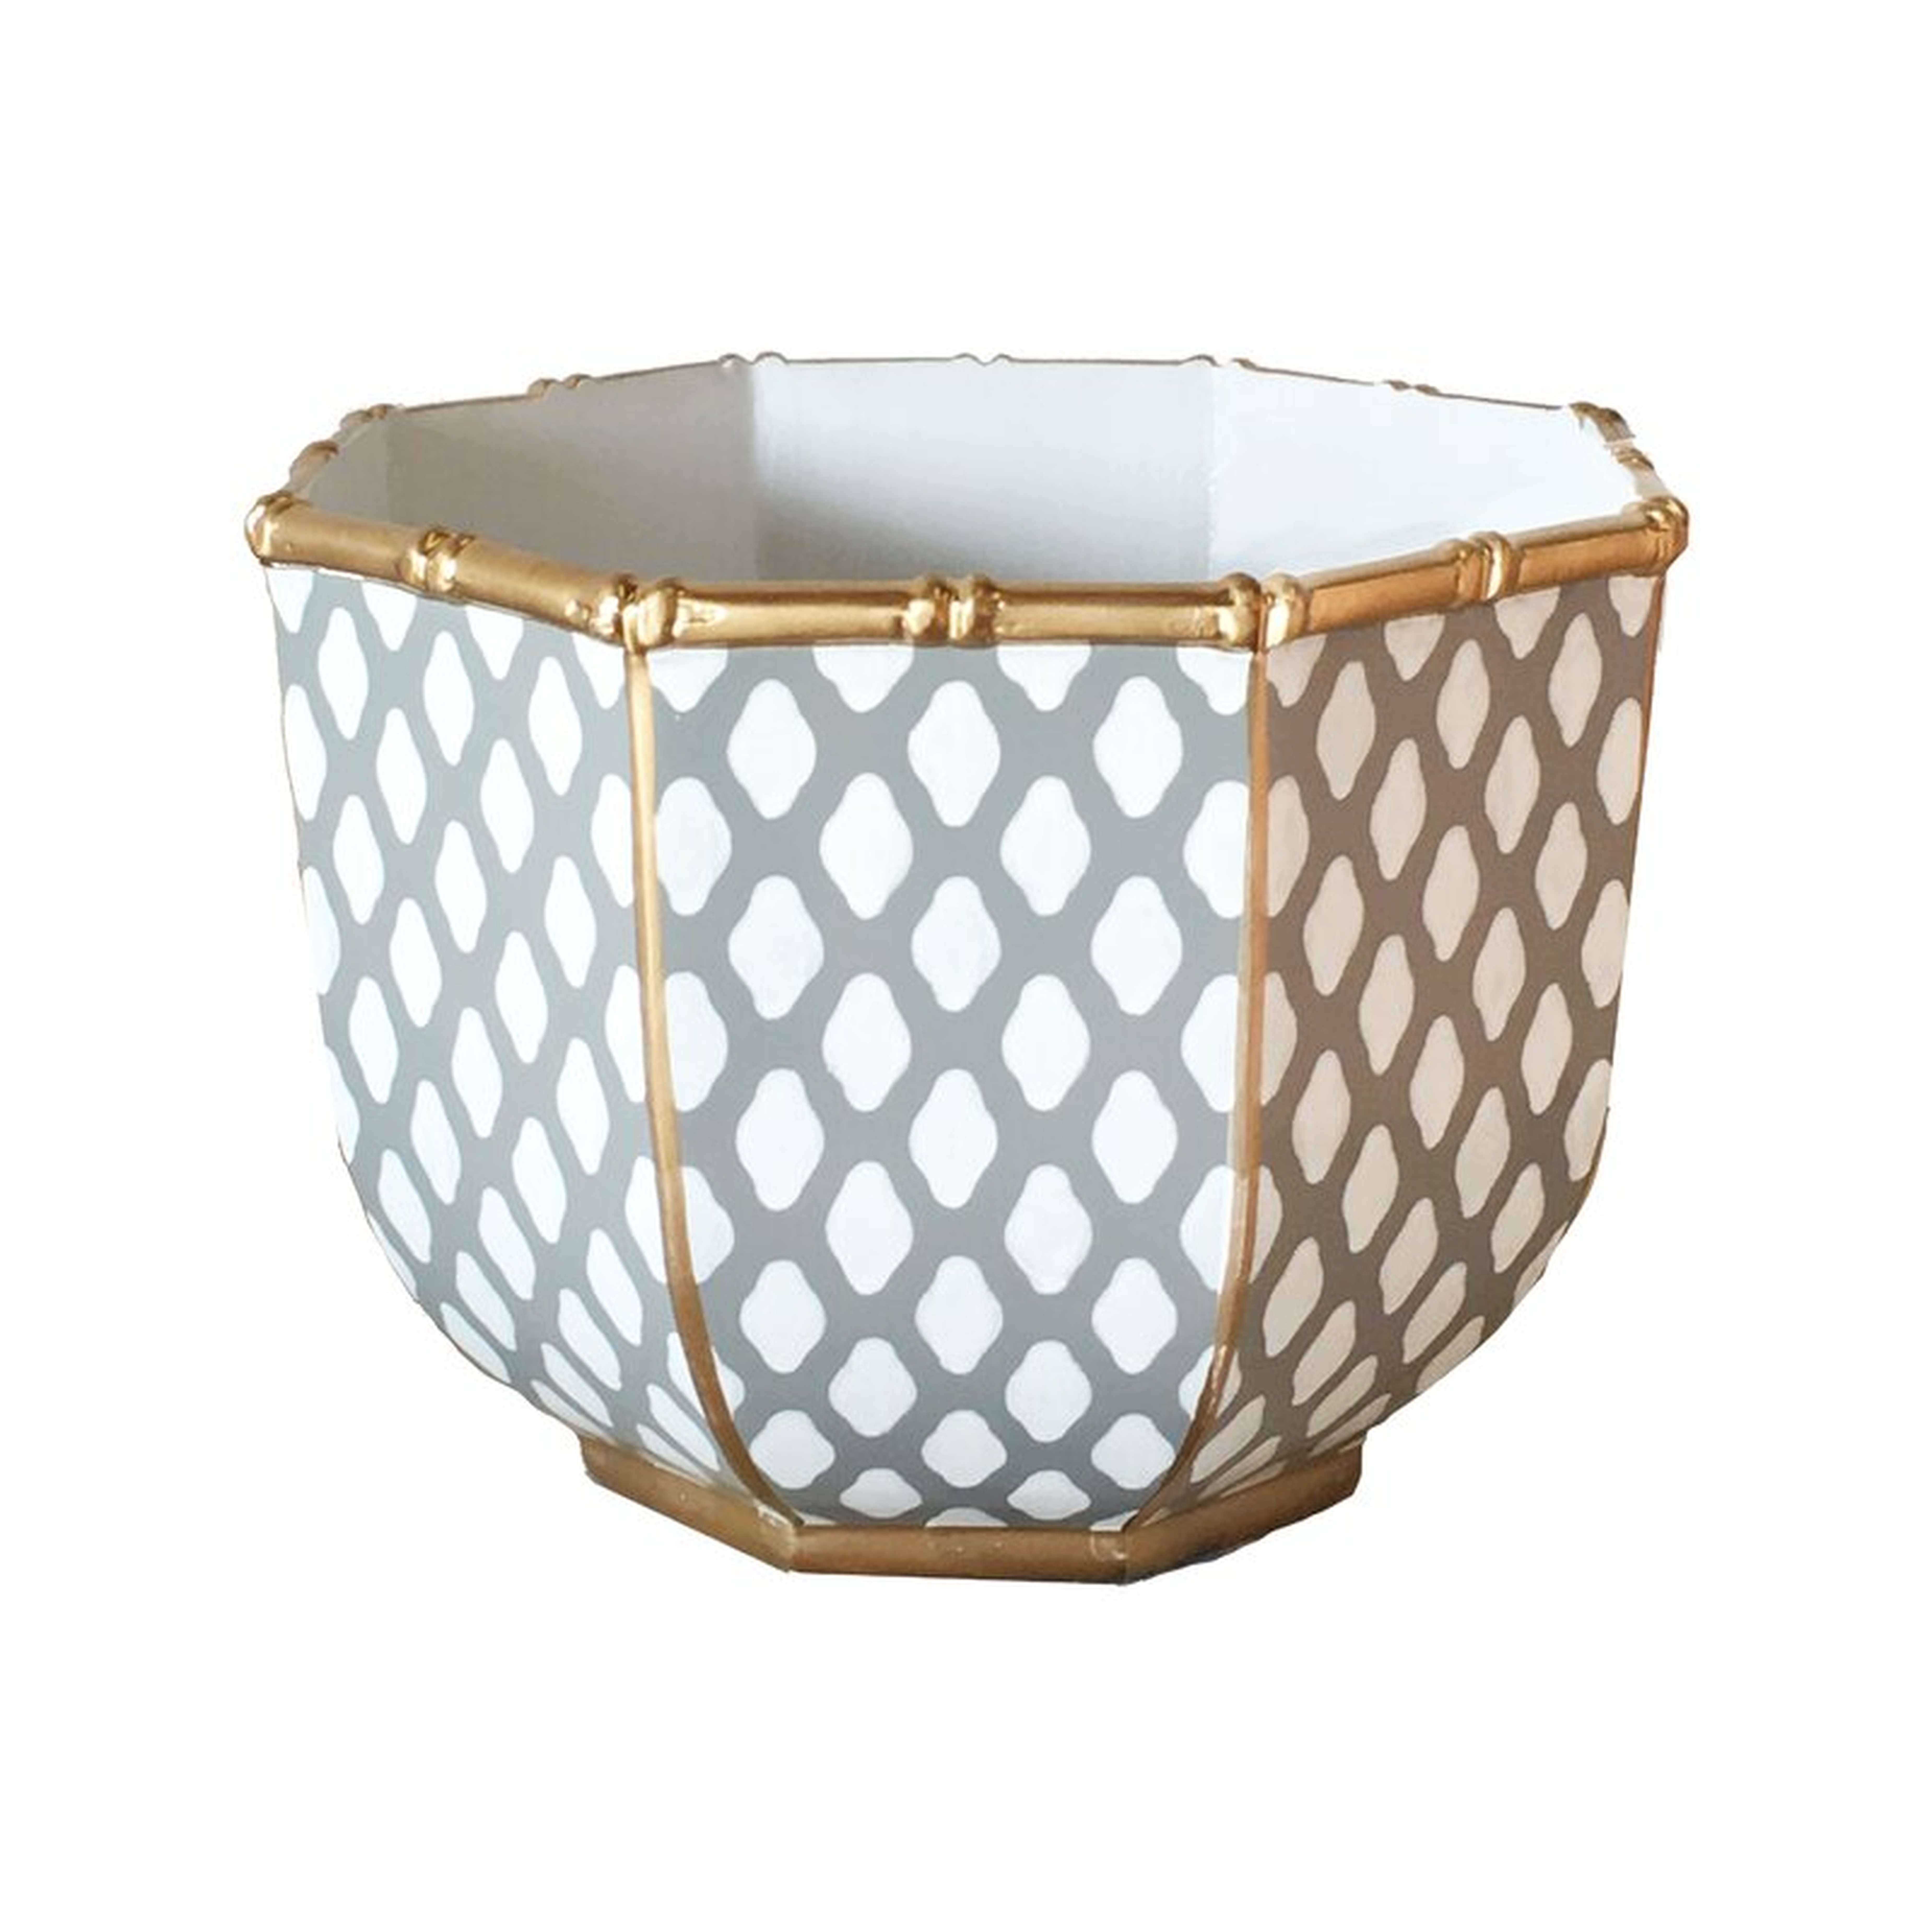 Dana Gibson Inc. Bamboo Metal Decorative Bowl Size: 6" H x 9" W x 9" D, Color: Parsi Dark Gray - Perigold